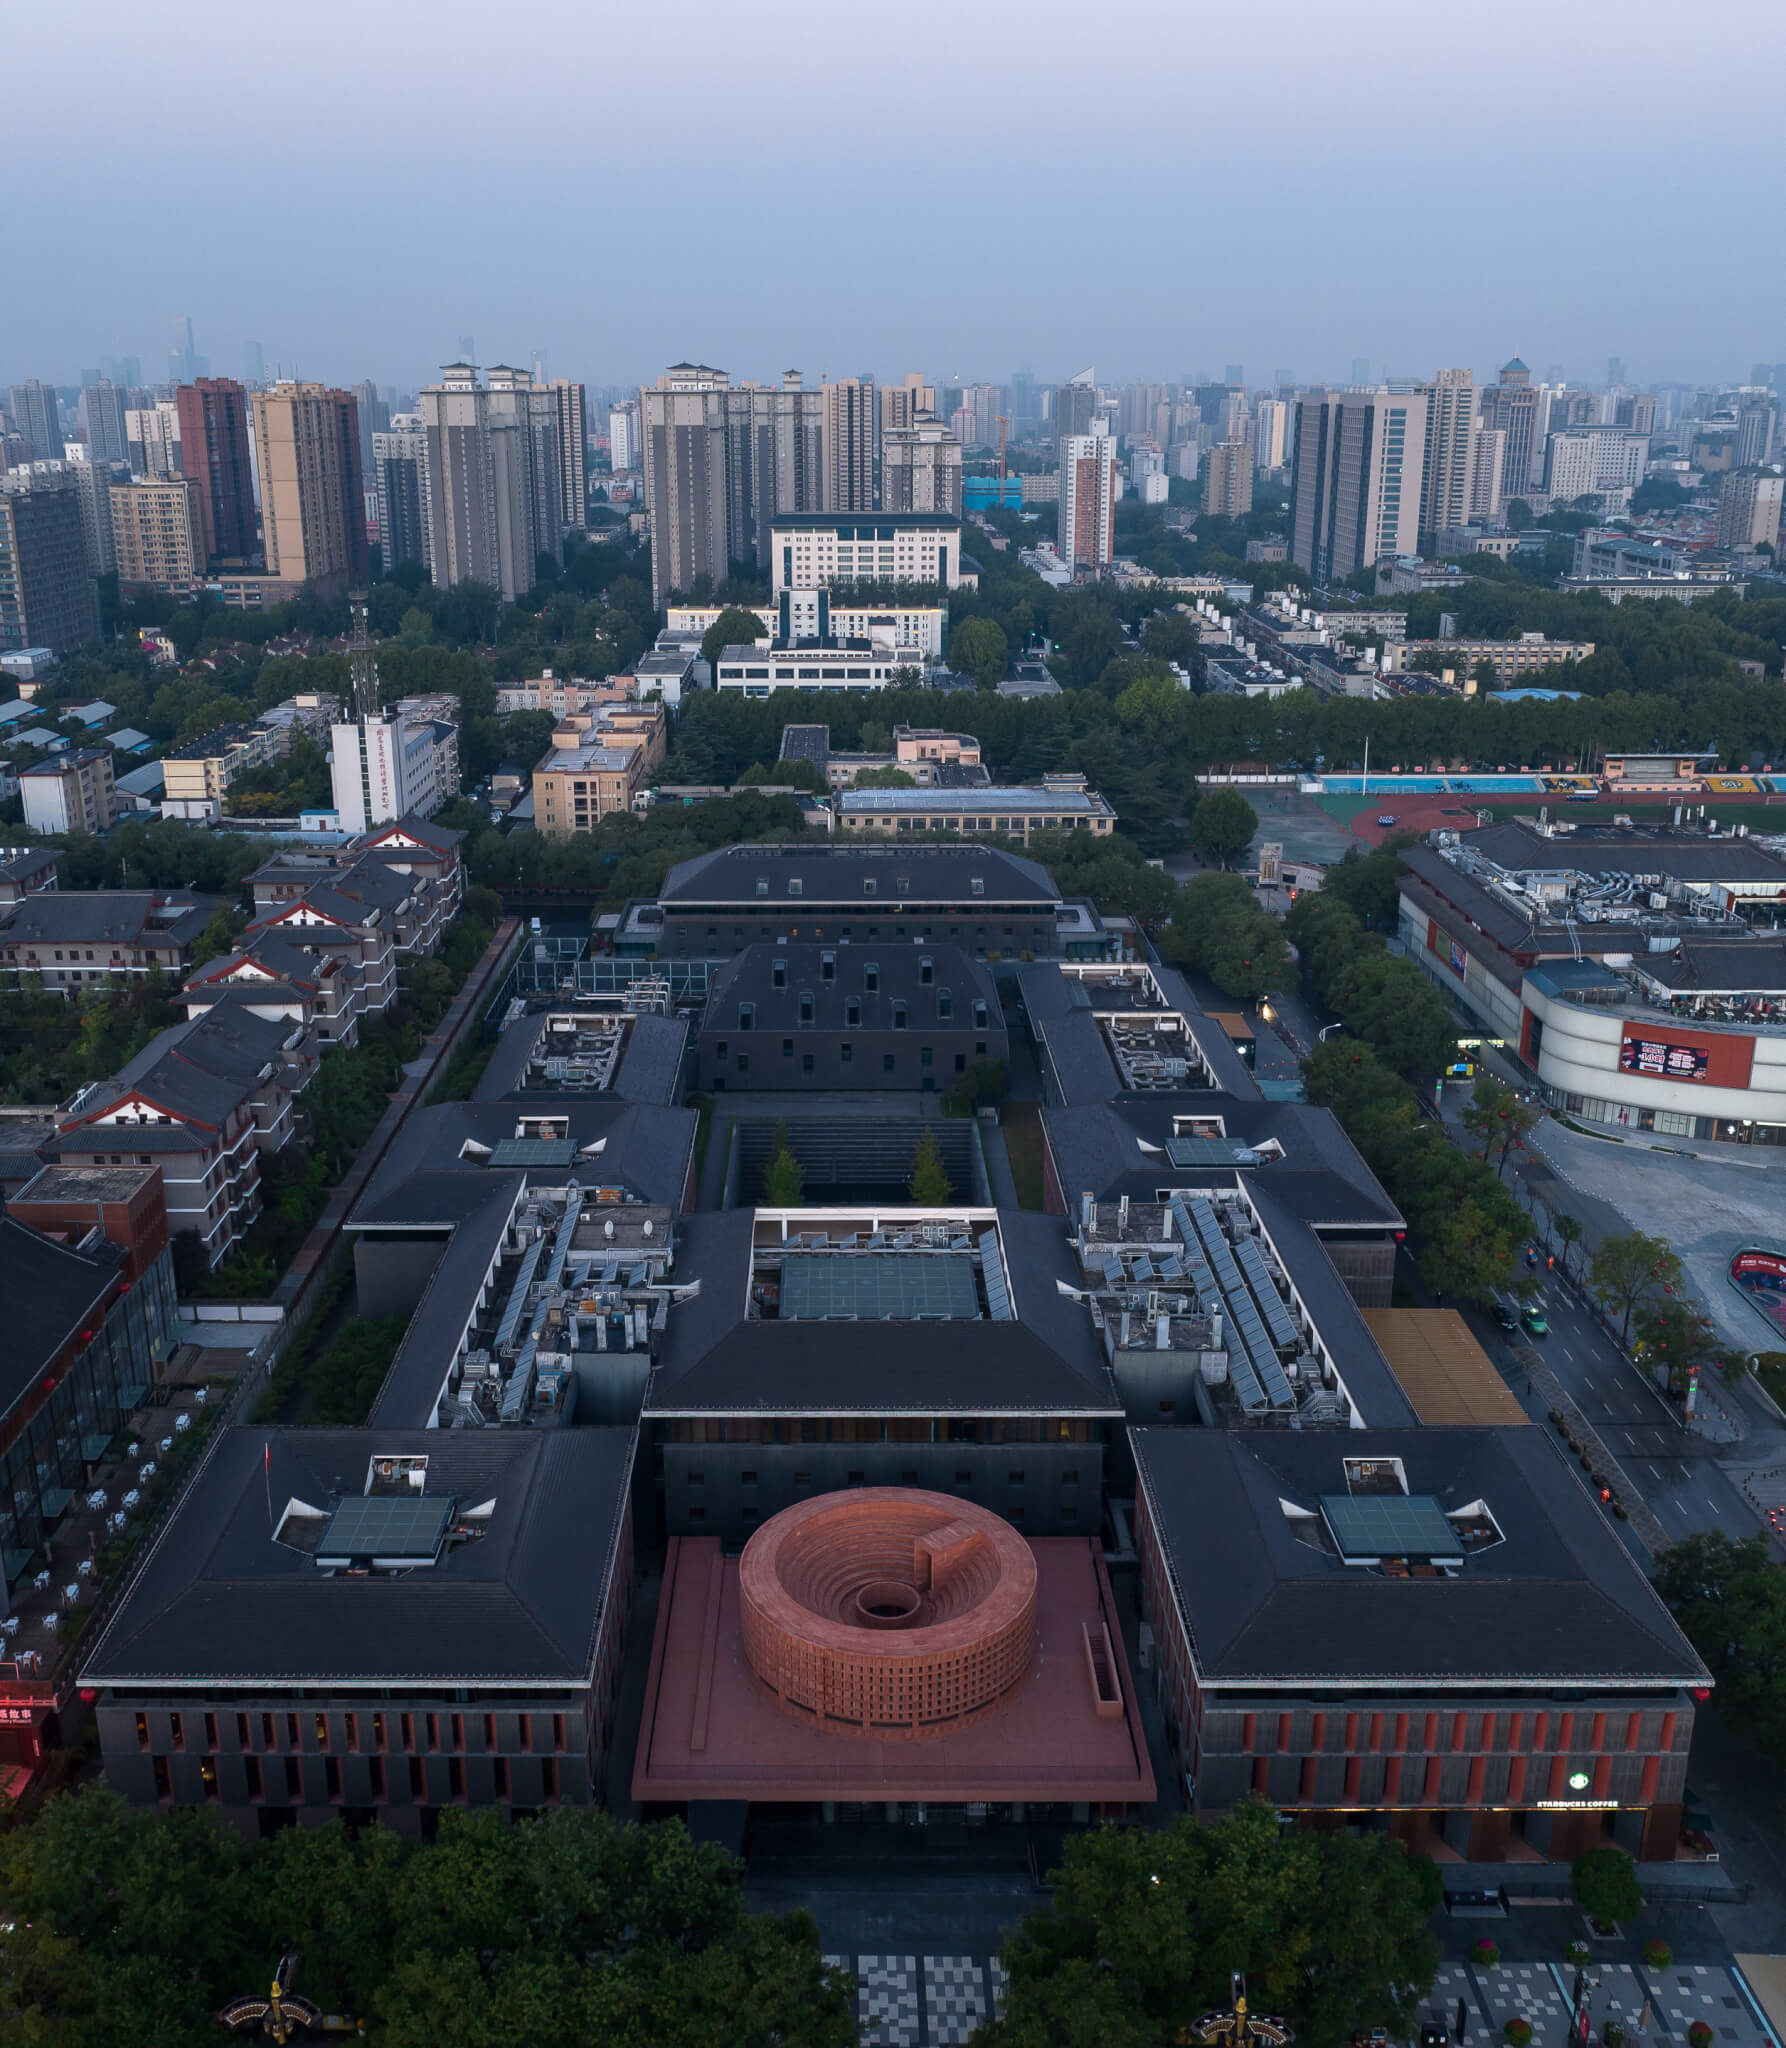 bird's eye view of a museum in an urban setting